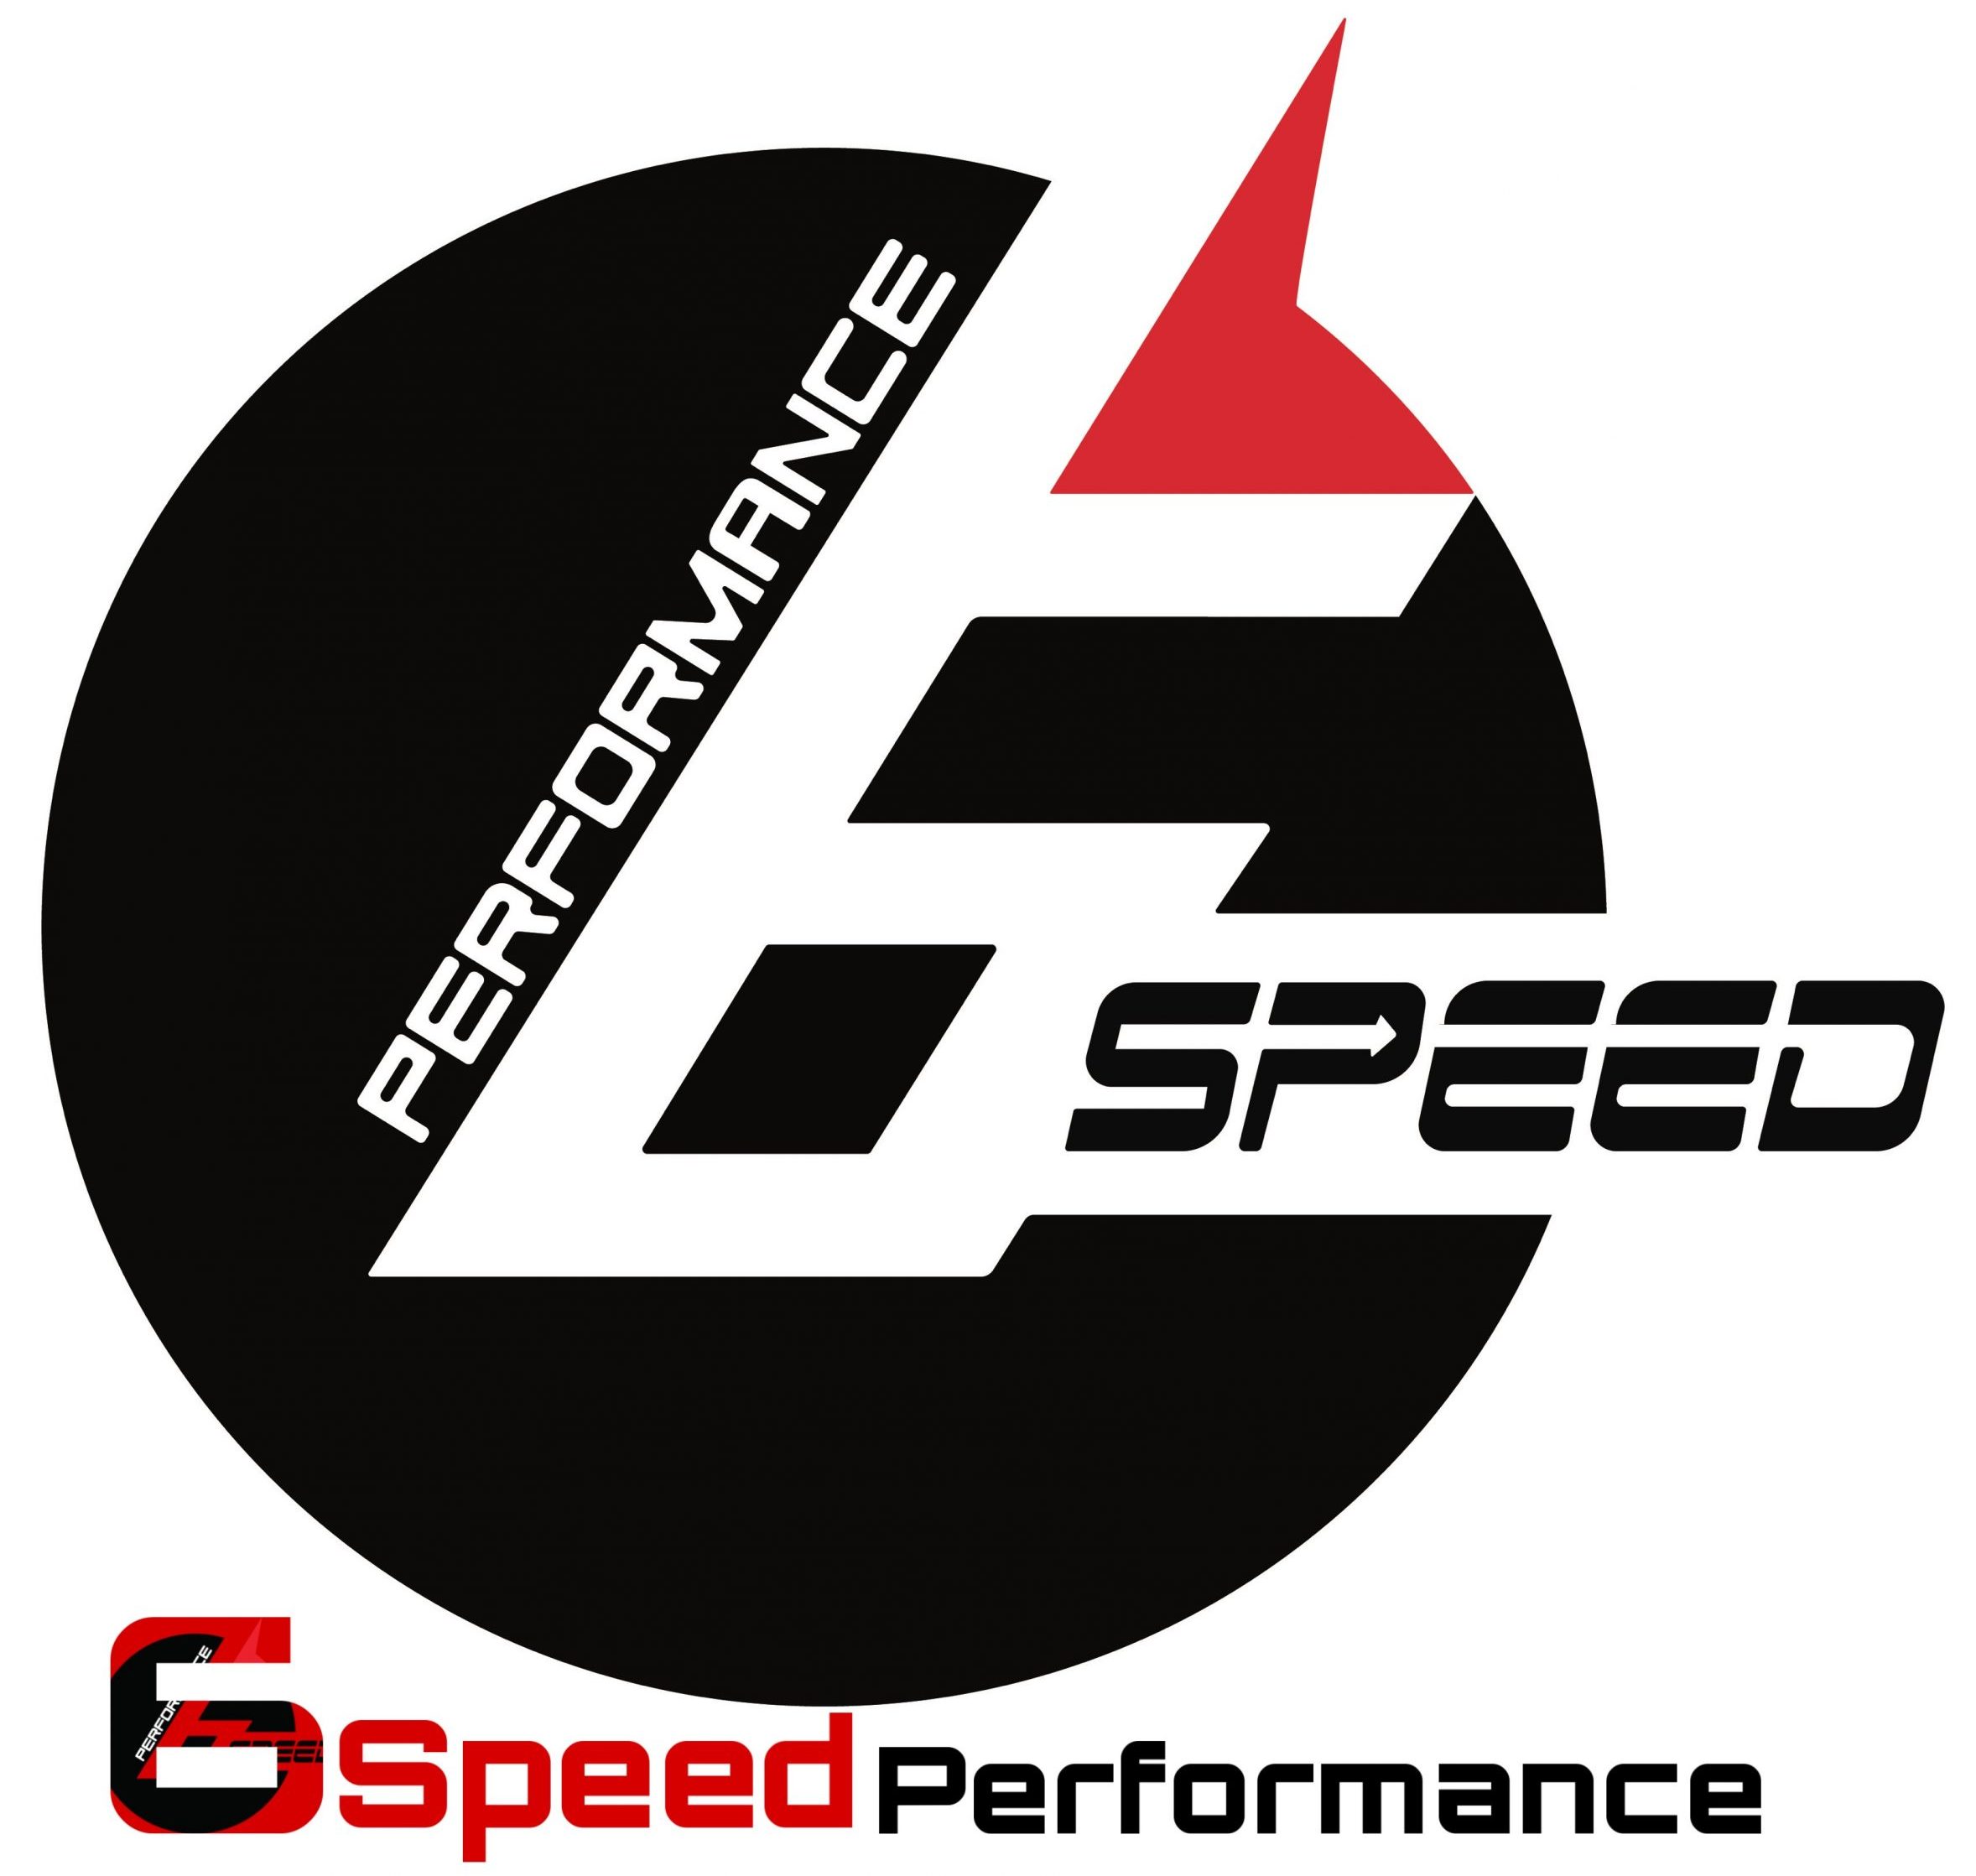 6 Speed Performance